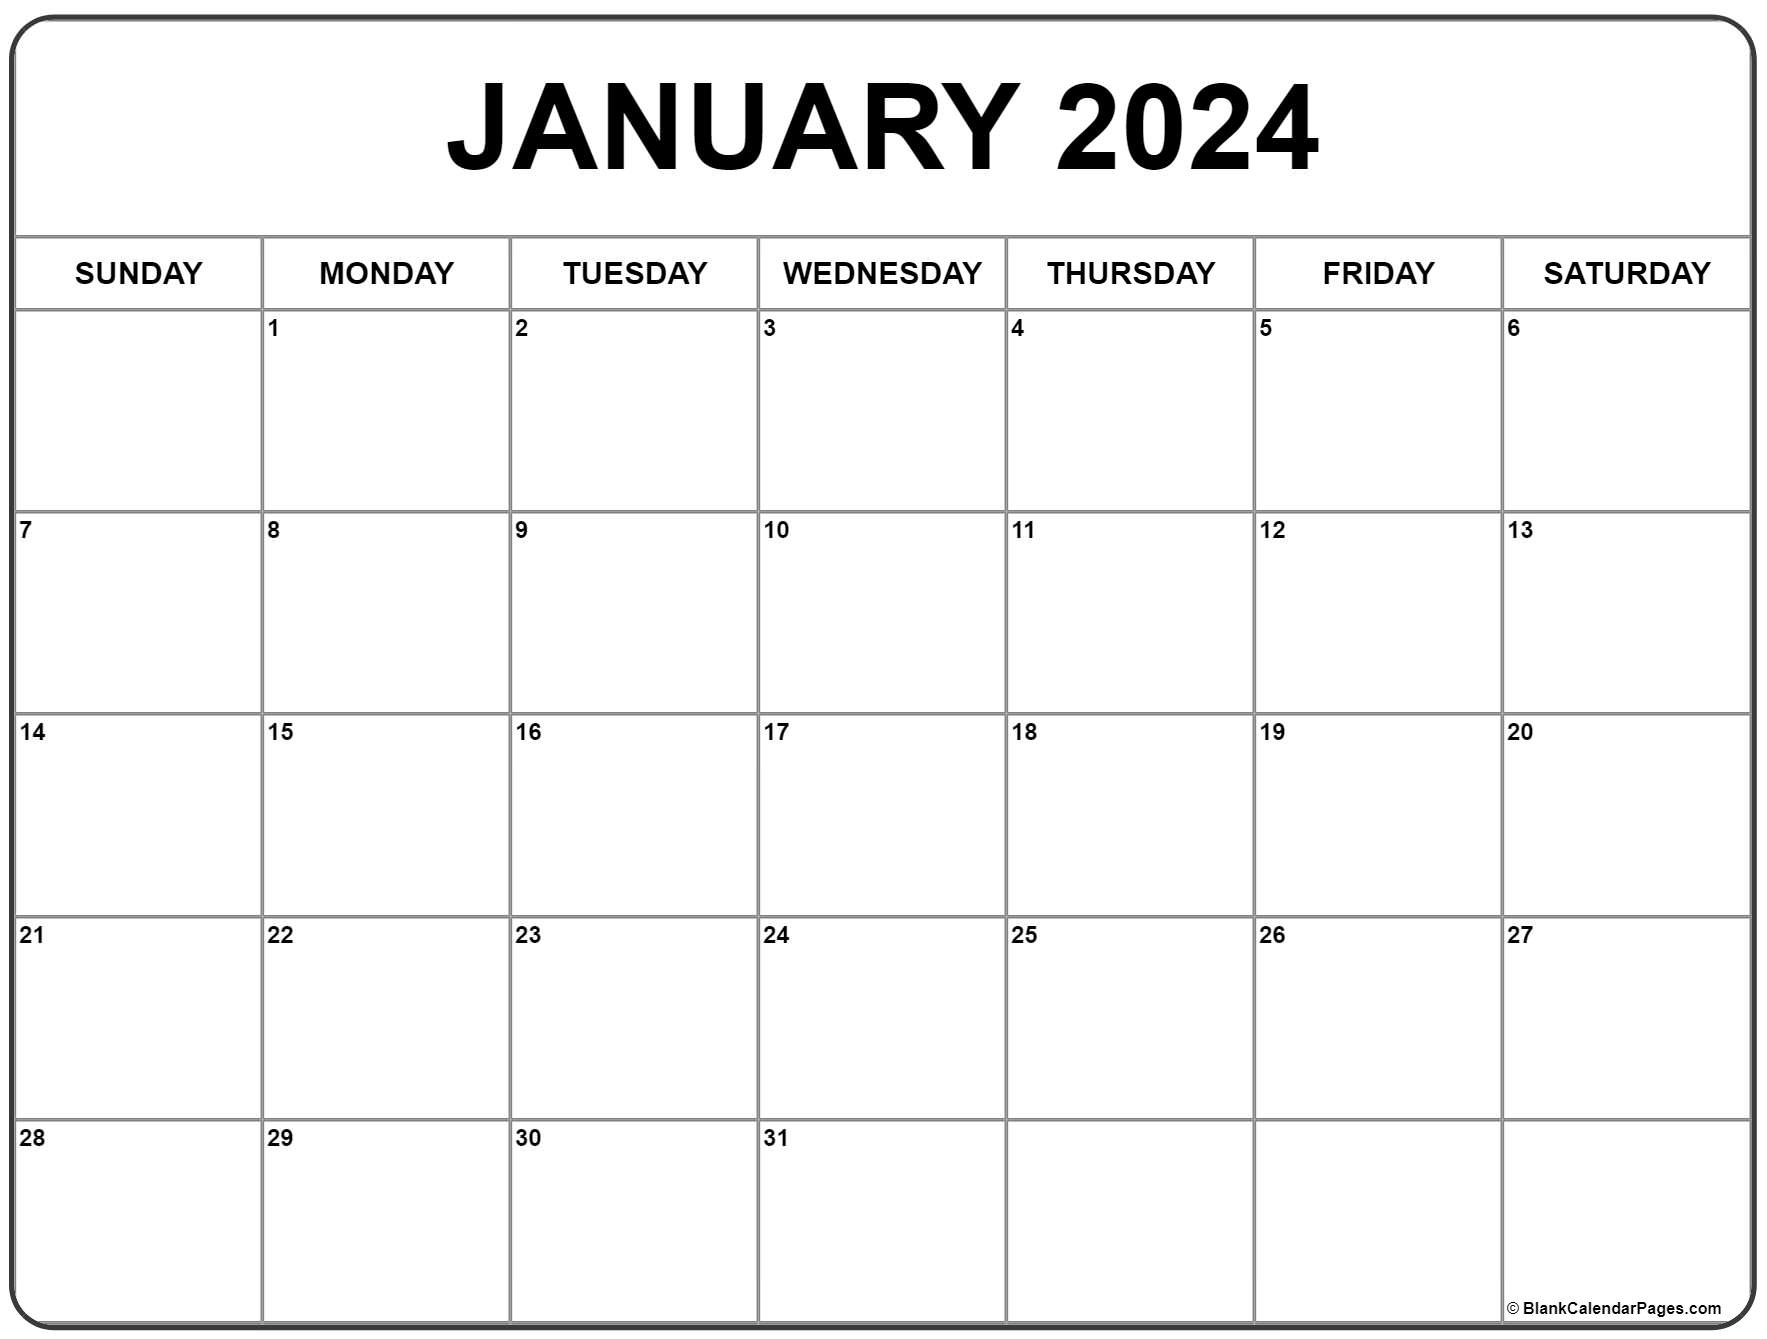 January 2024 Calendar | Free Printable Calendar for Monthly Printable Calendar 2024 Free